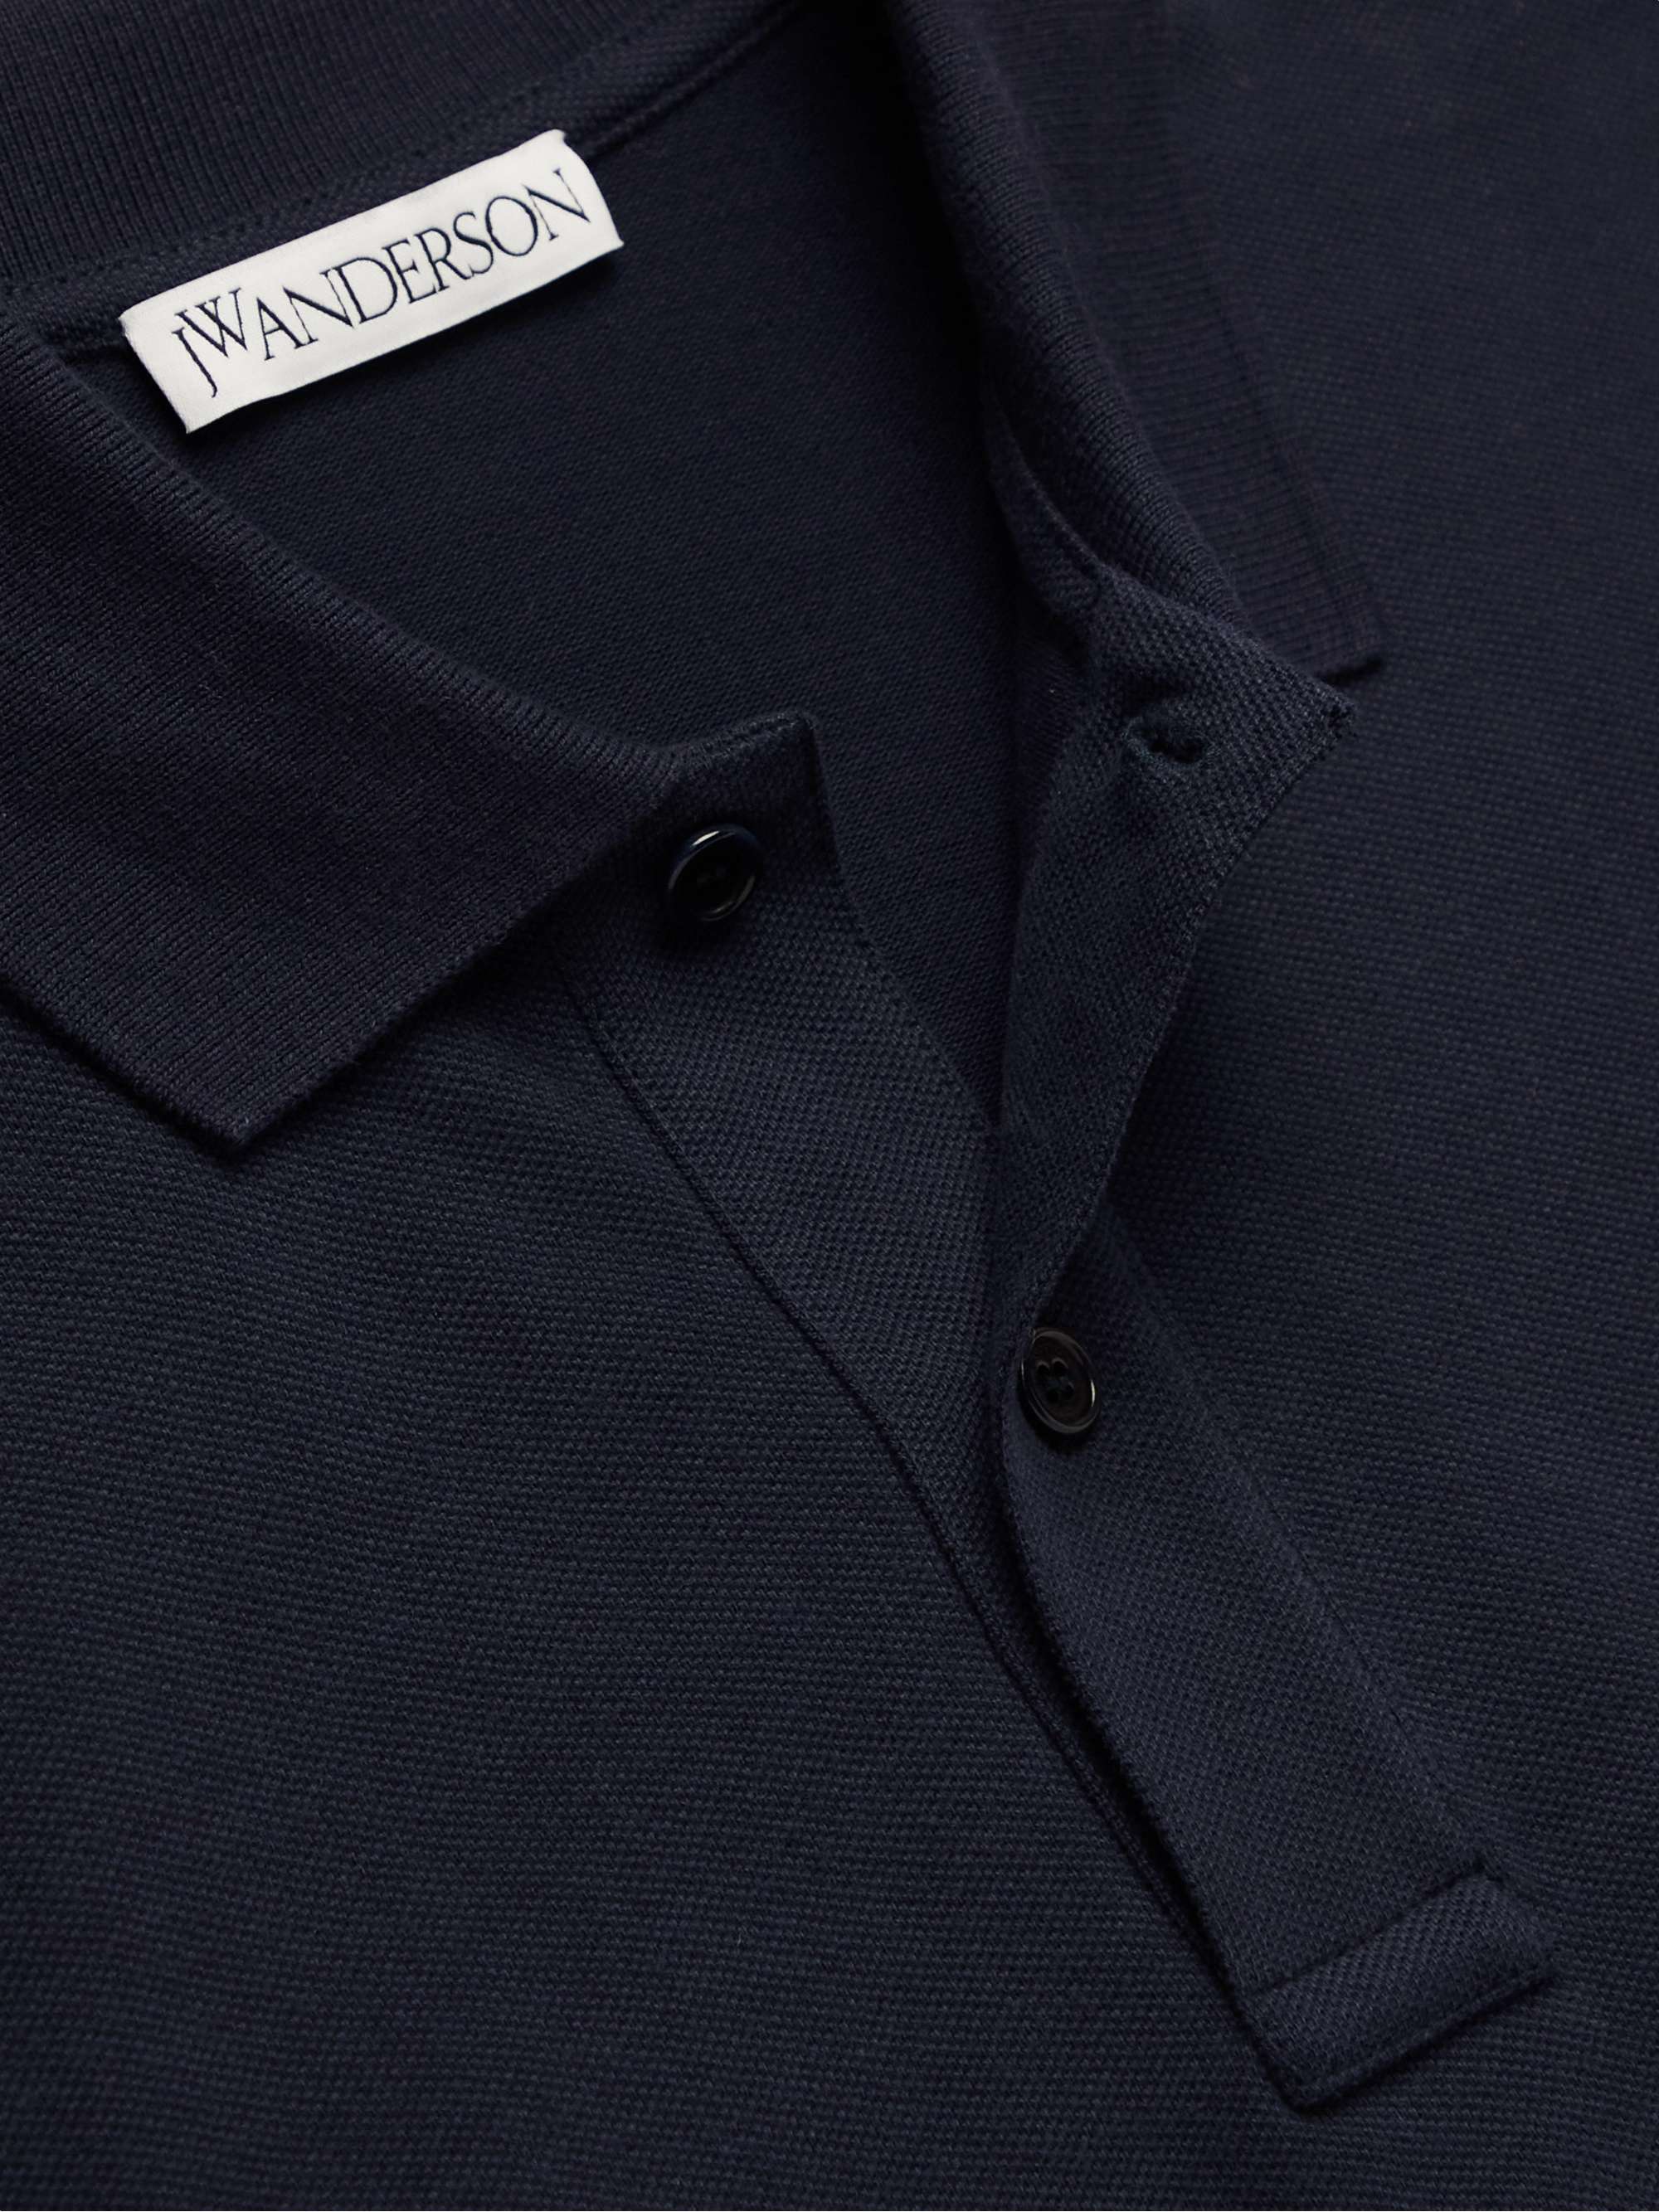 JW ANDERSON Logo-Appliquéd Cotton-Piqué Polo Shirt